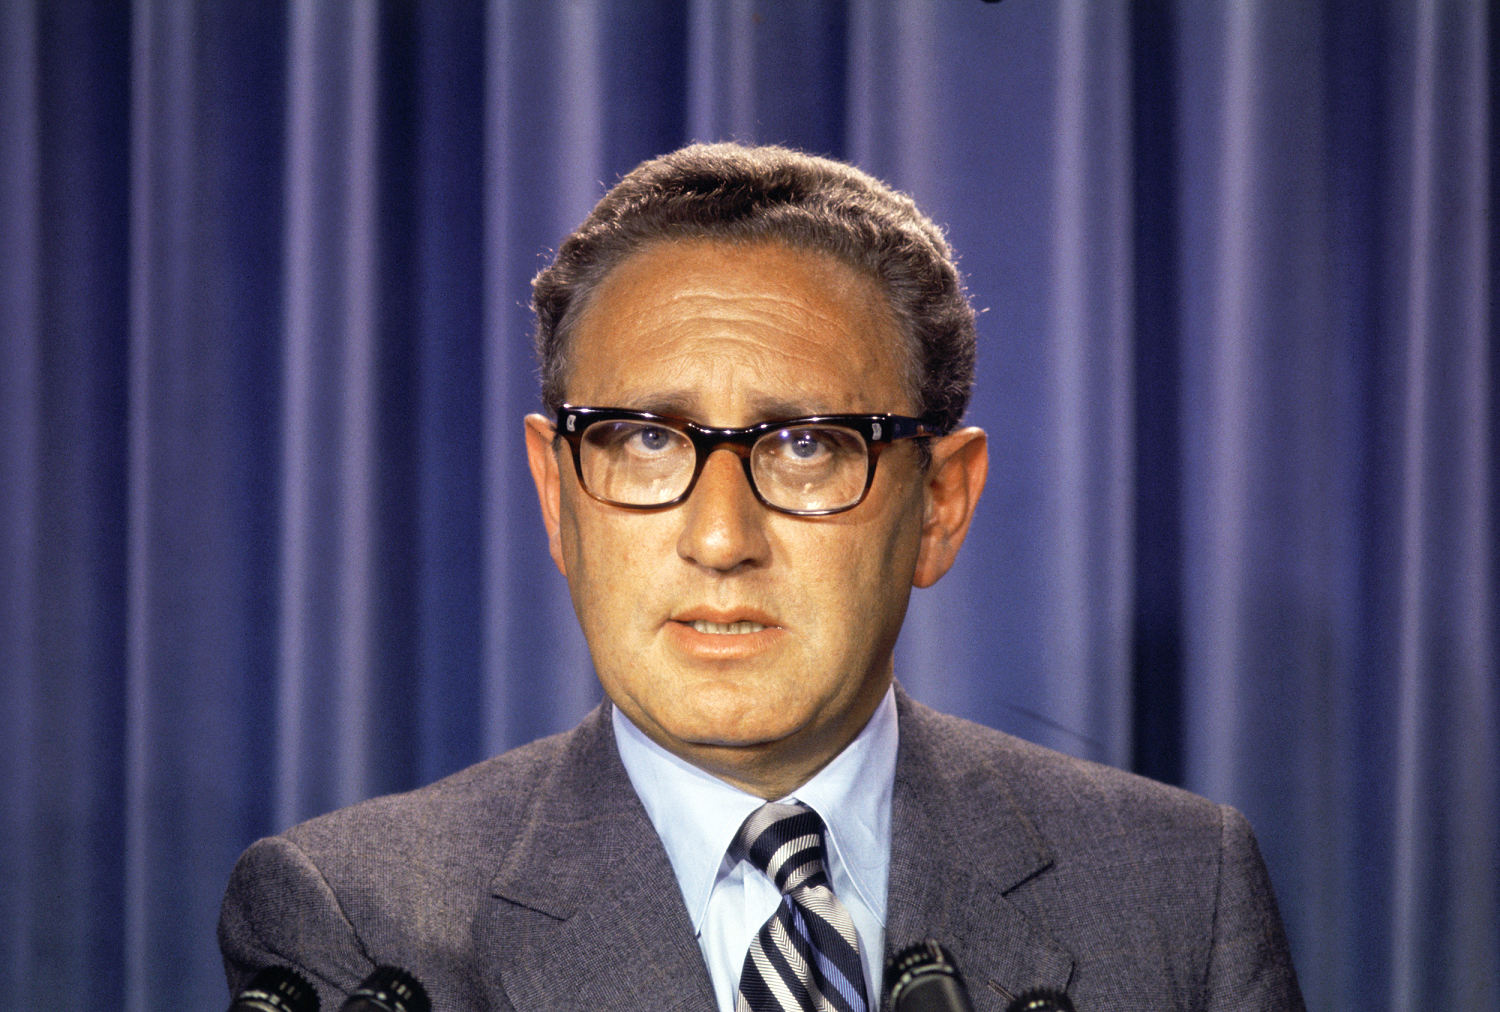 Henry Kissinger remembered as influential statesman, 'war criminal'